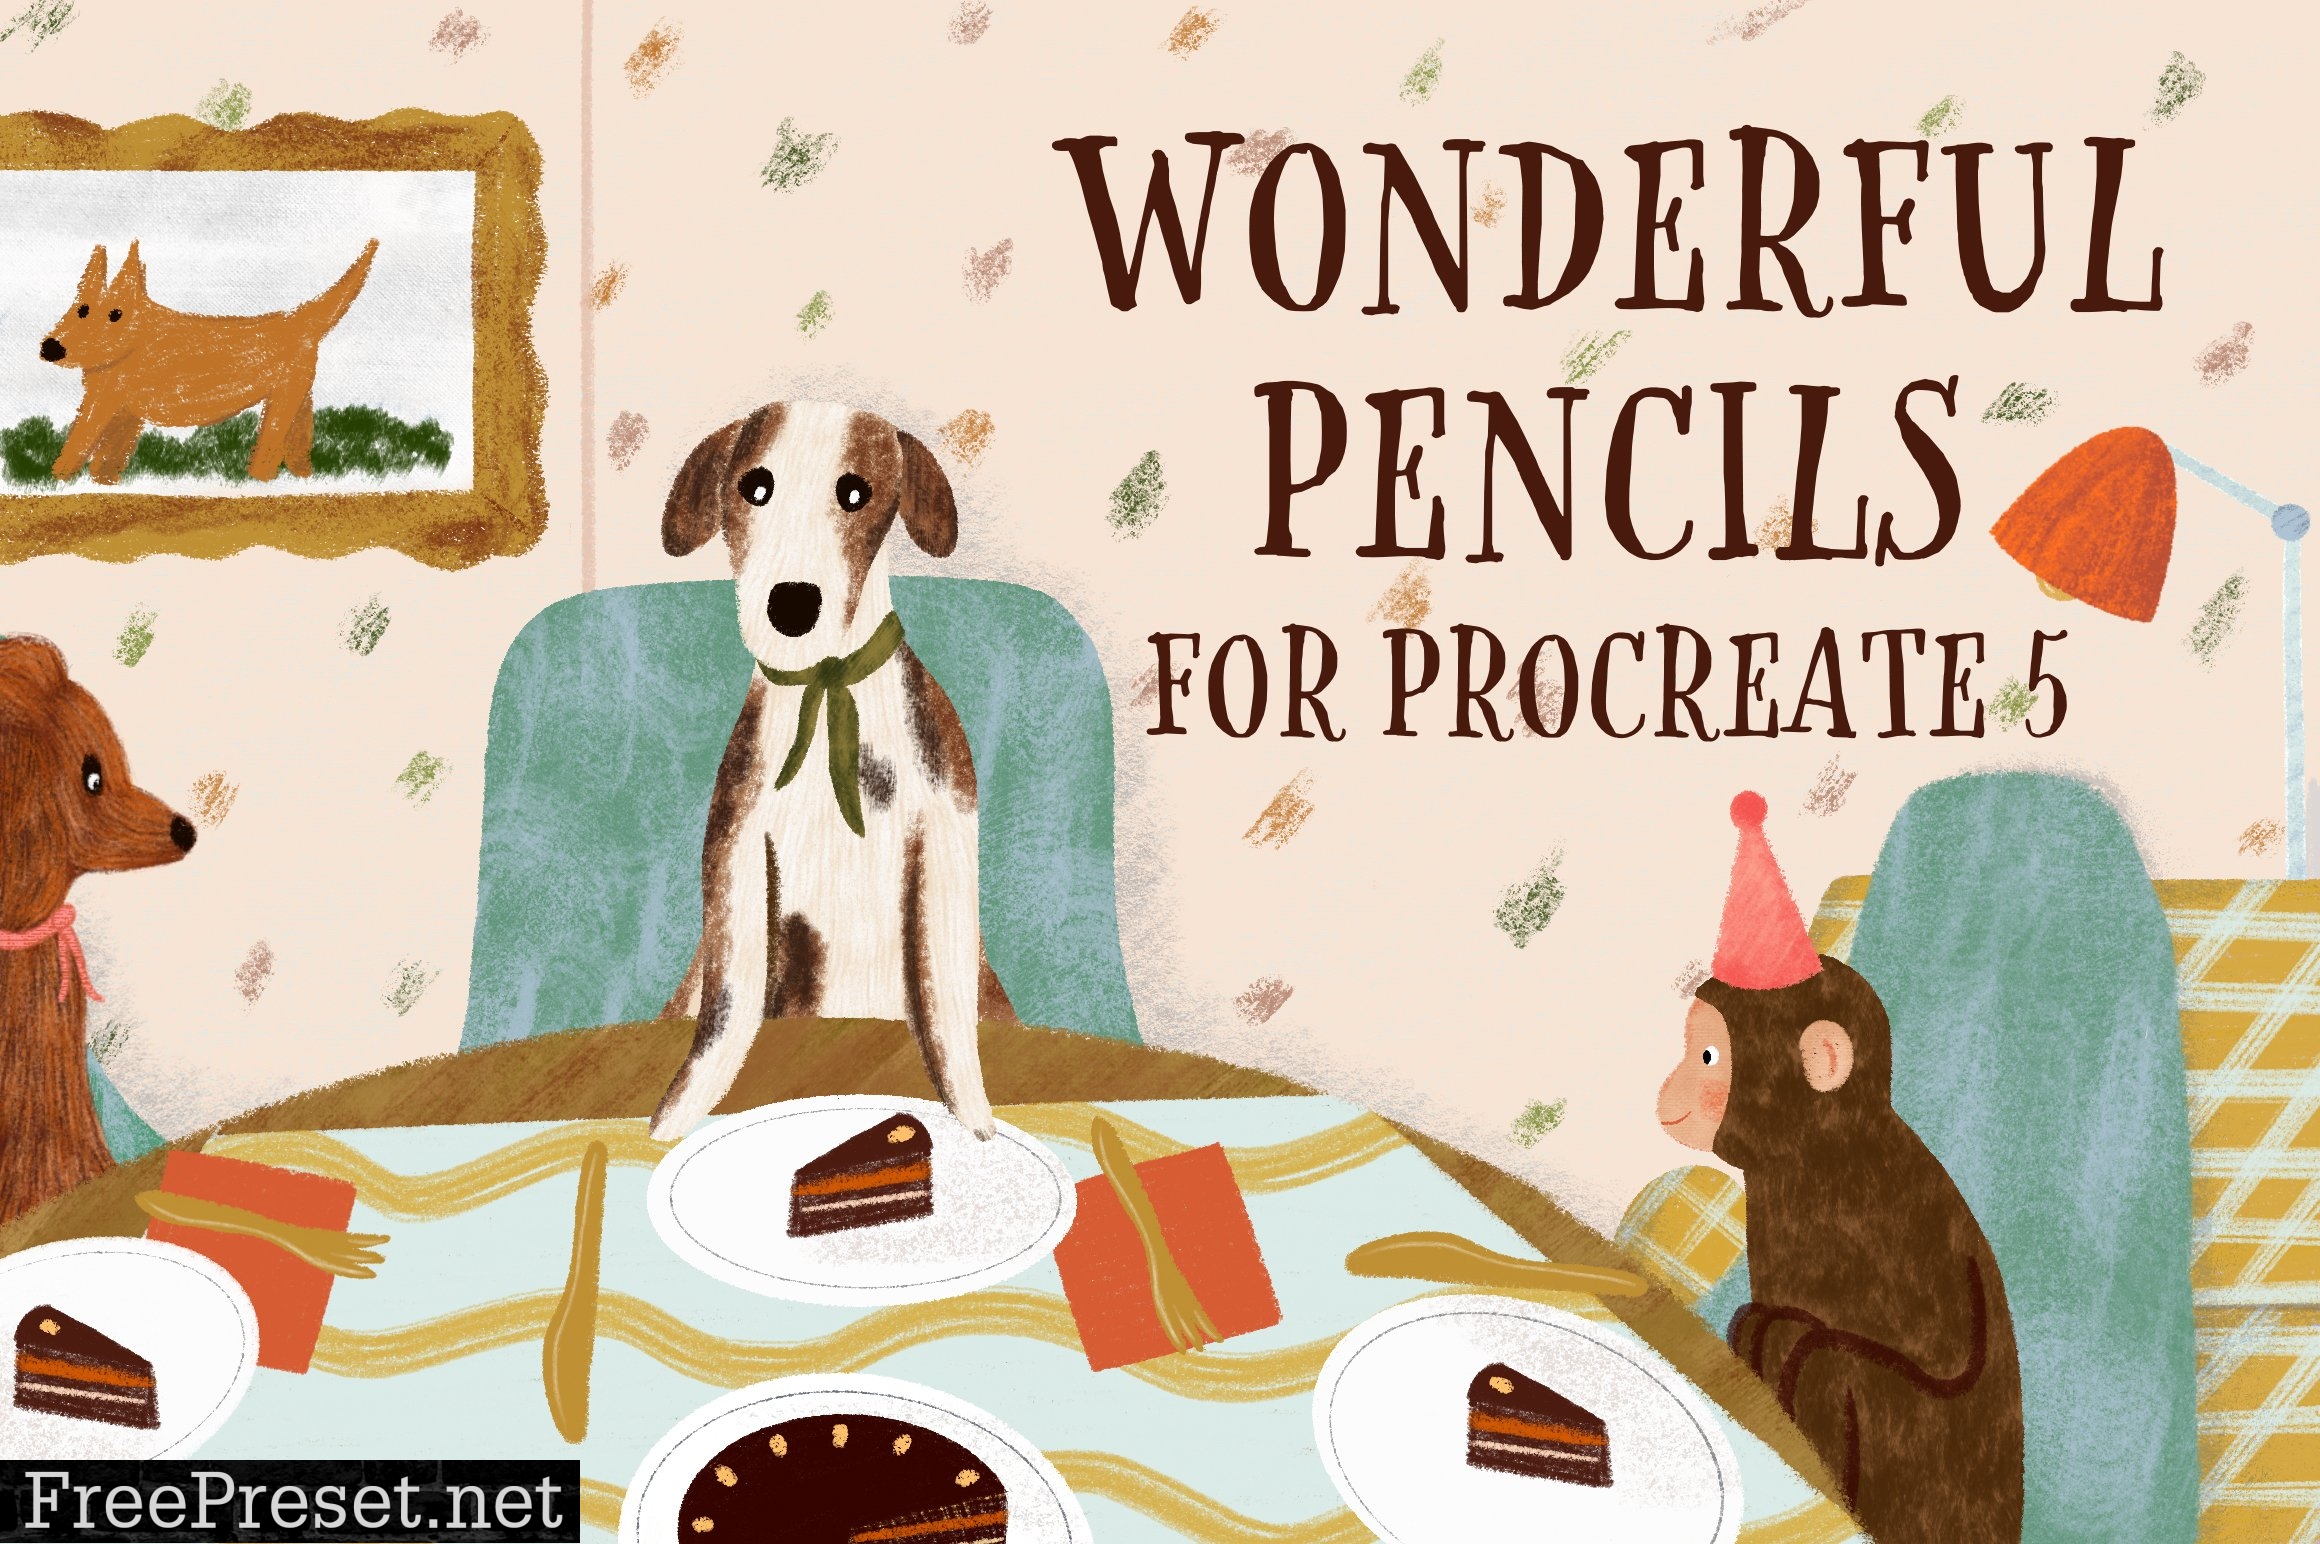 Wonderful Pencils for Procreate 4489057